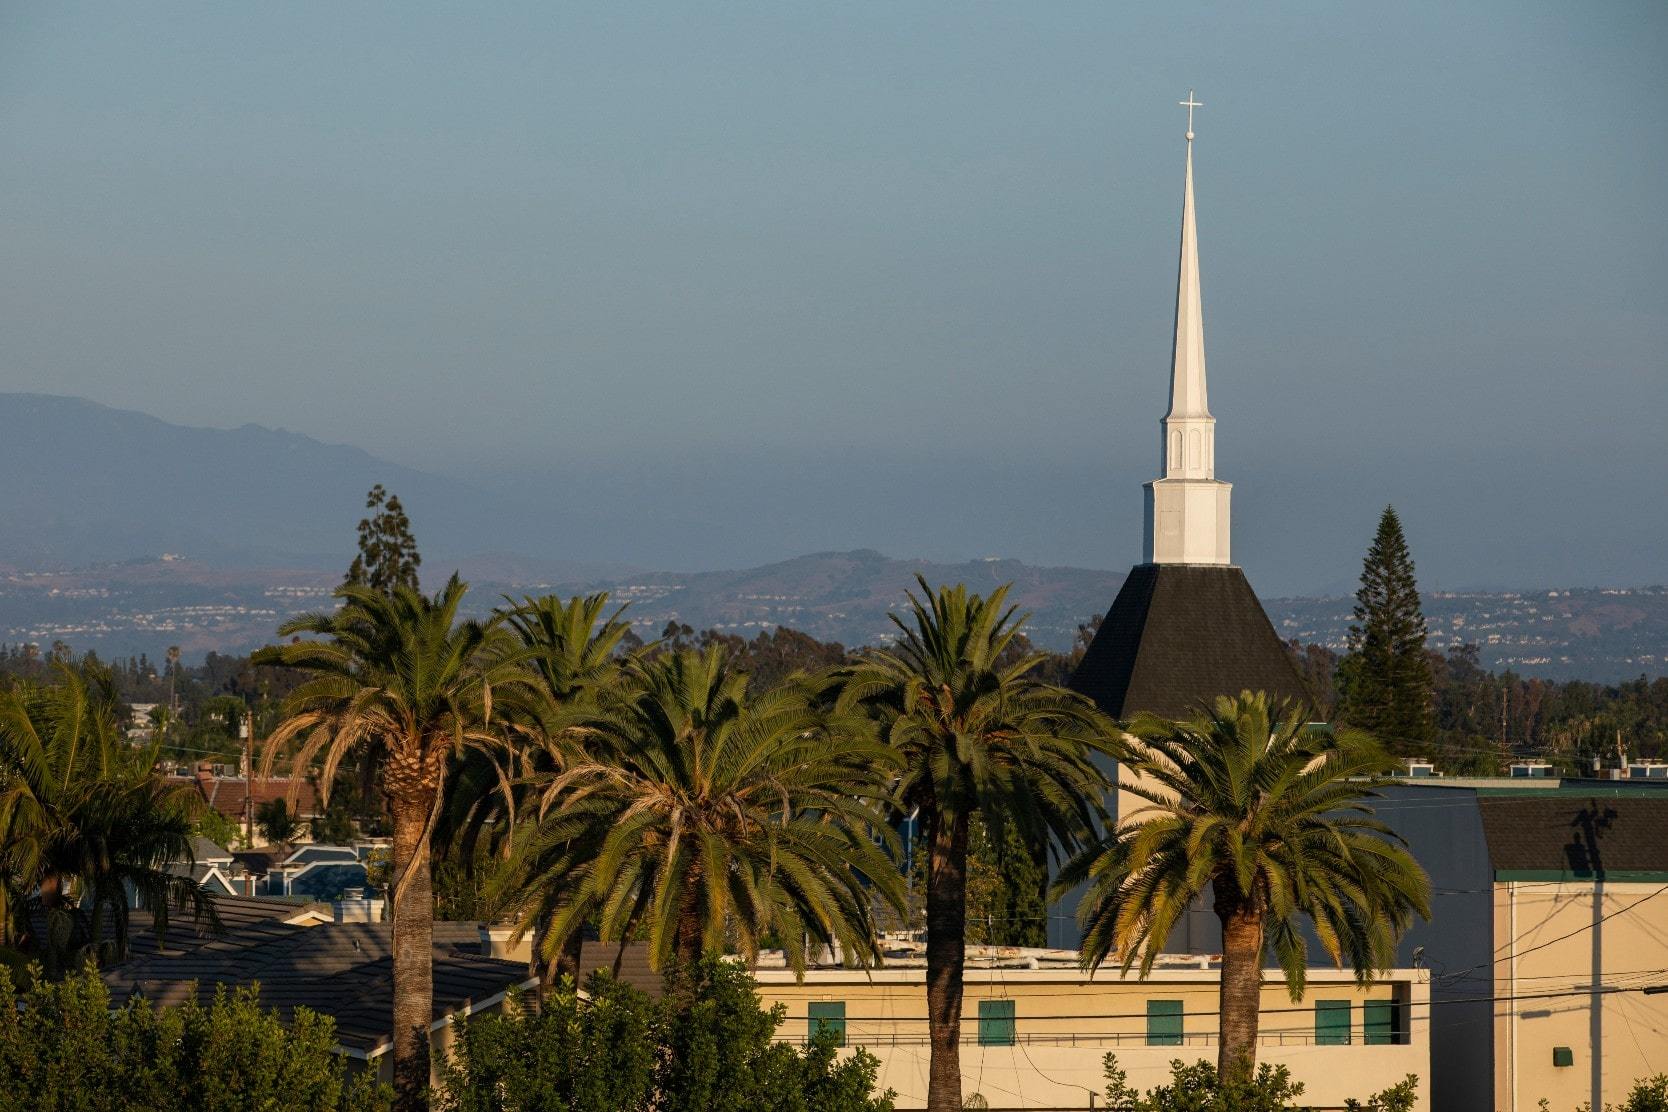 Church spire rising above palm trees in Brea, California